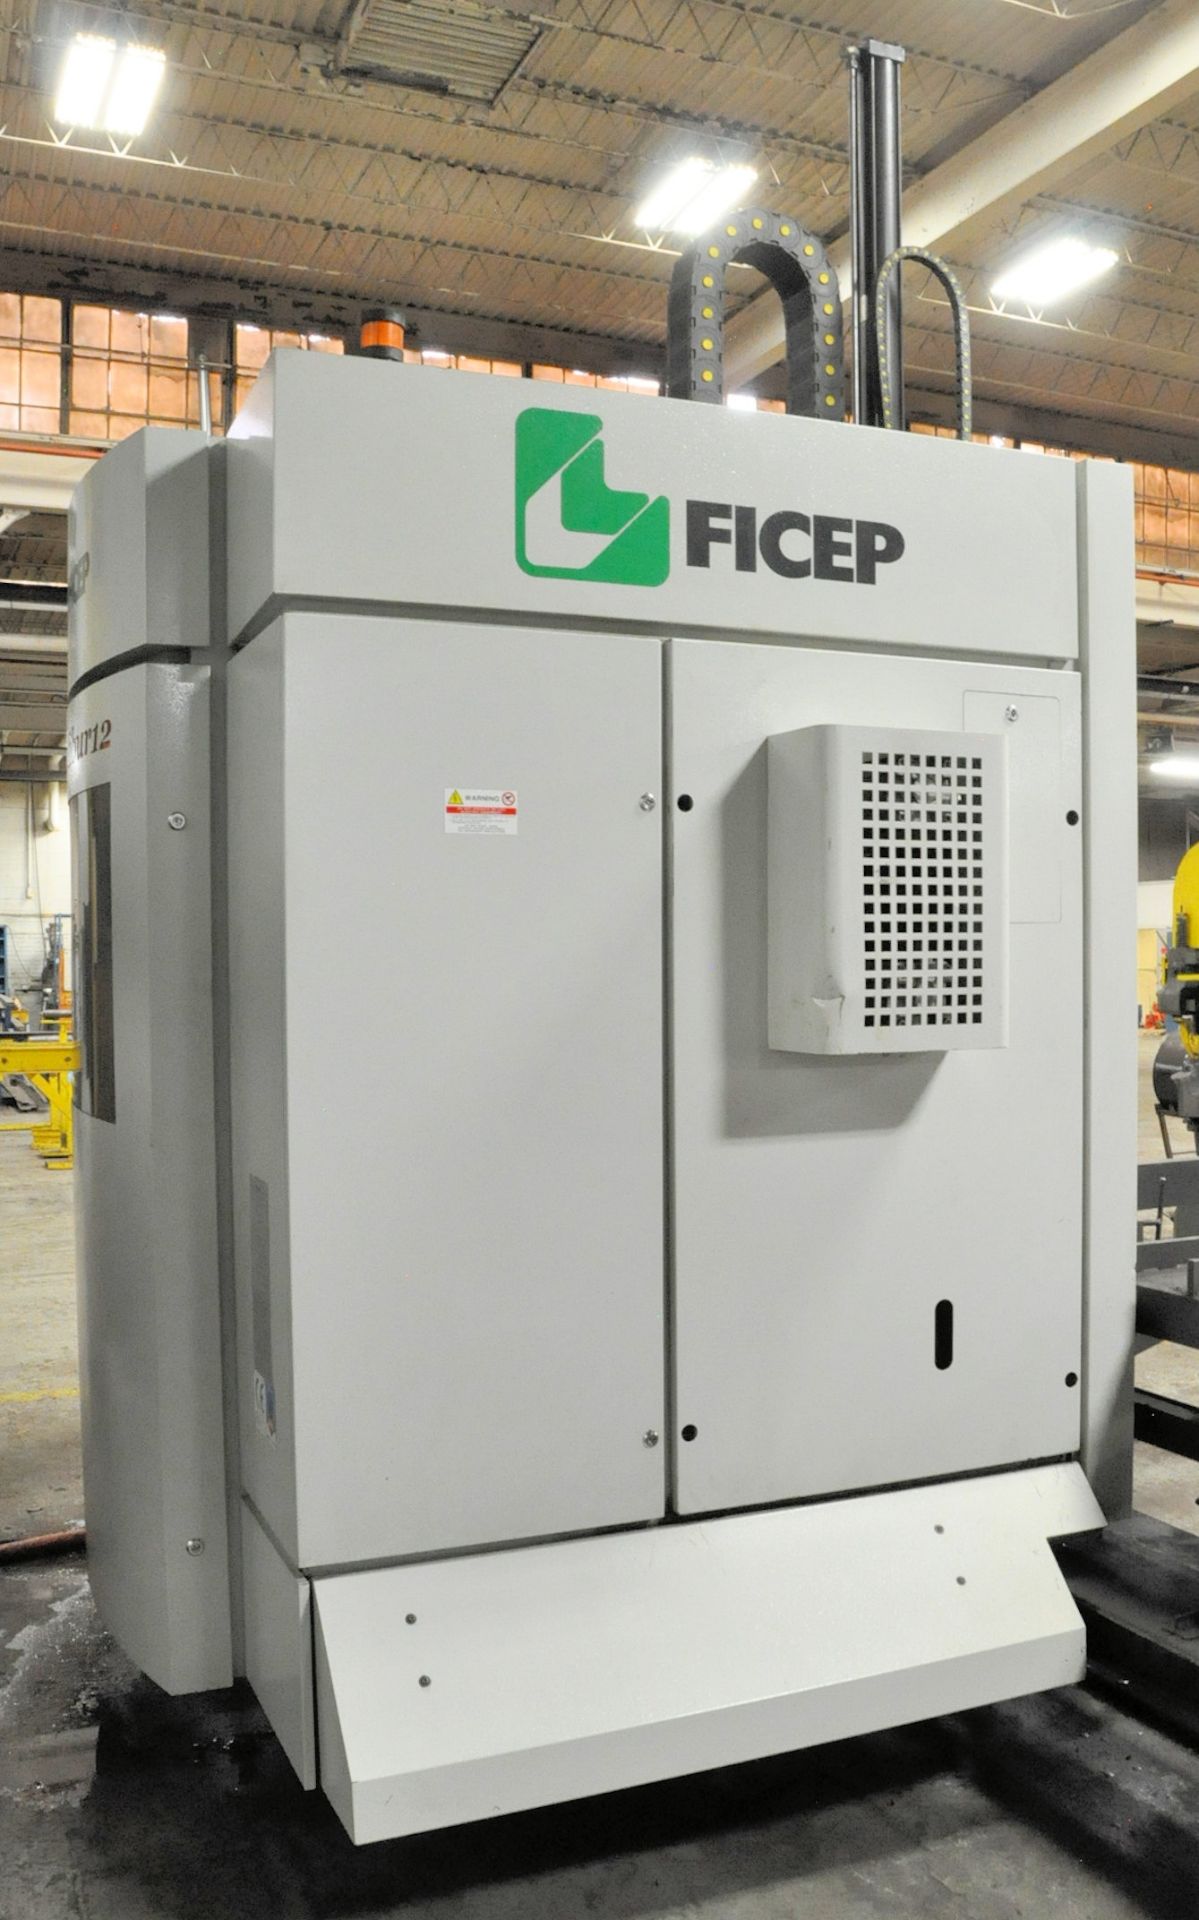 FICEP Model Excalibur 12 CNC Drilling Machine, 6-Station ATC, 67' Conveyor Length, (2012) - Image 3 of 7